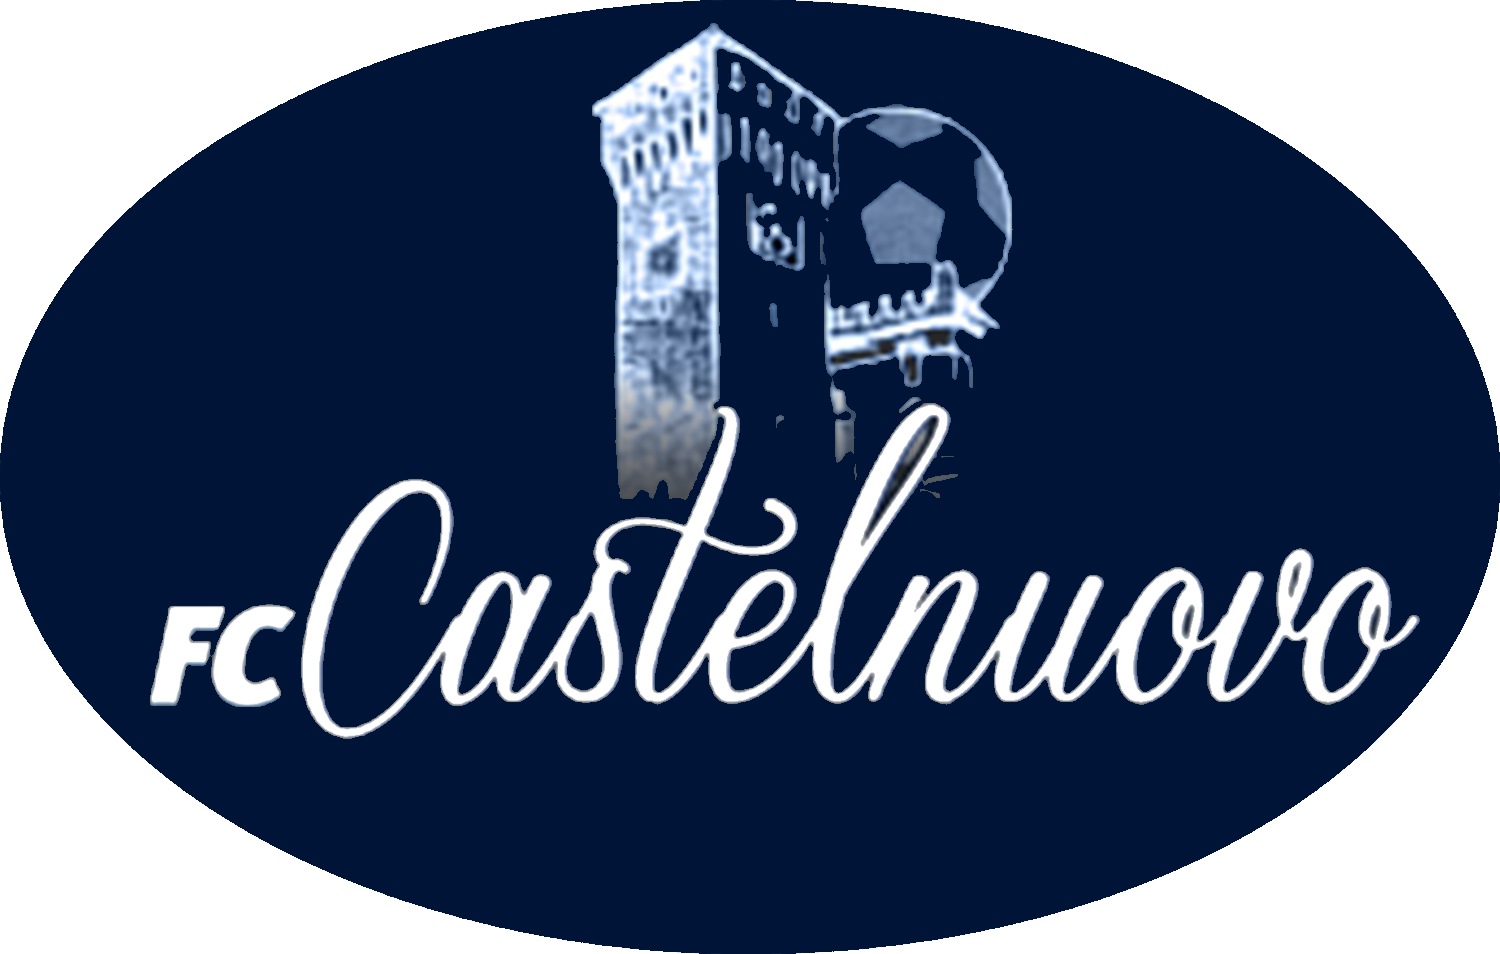 FC CASTELNUOVO v FIORANO